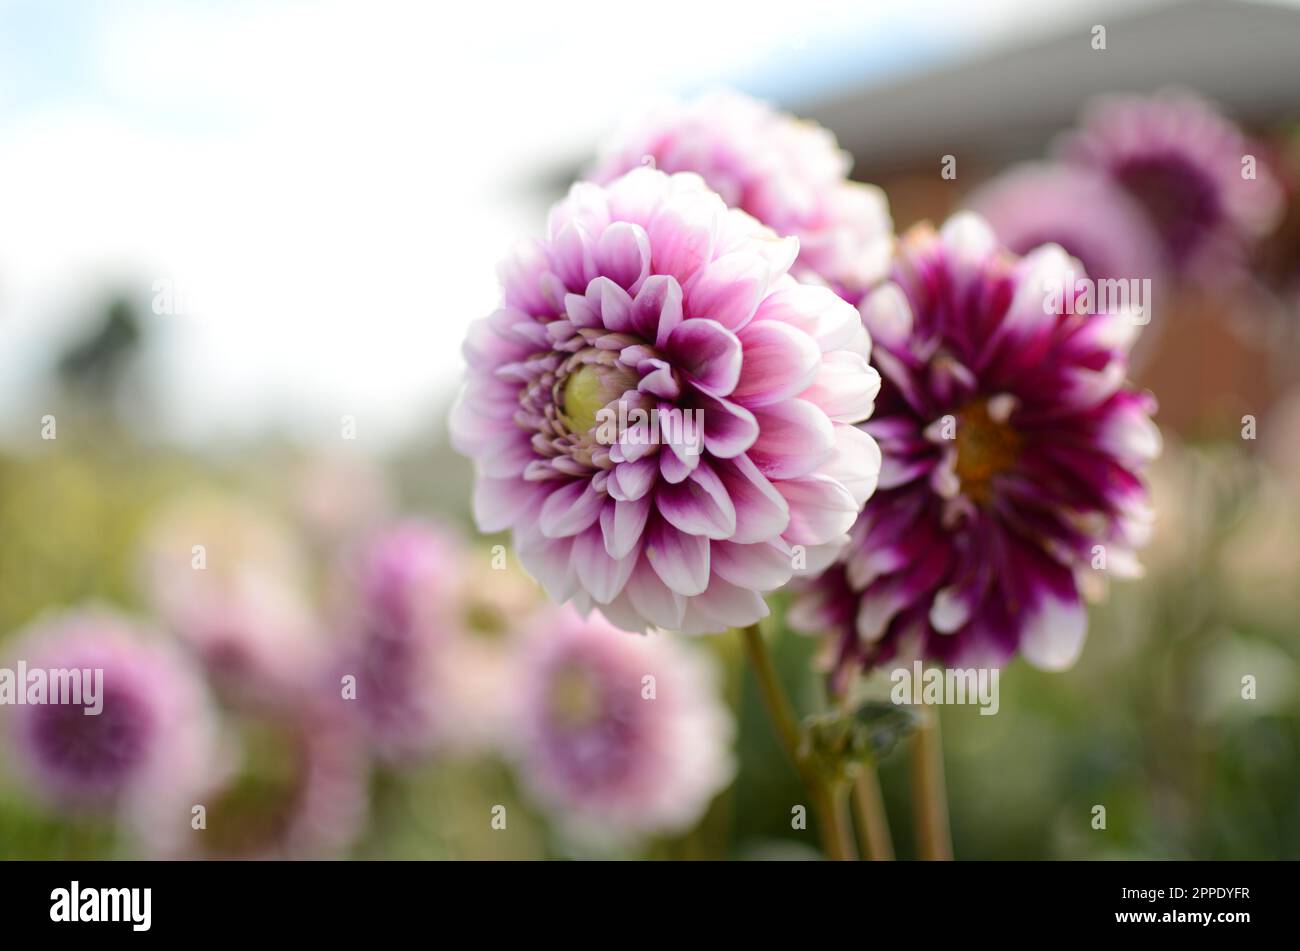 Purple And White 'Edinburgh' Decorative Dahlia Flower. Stock Photo